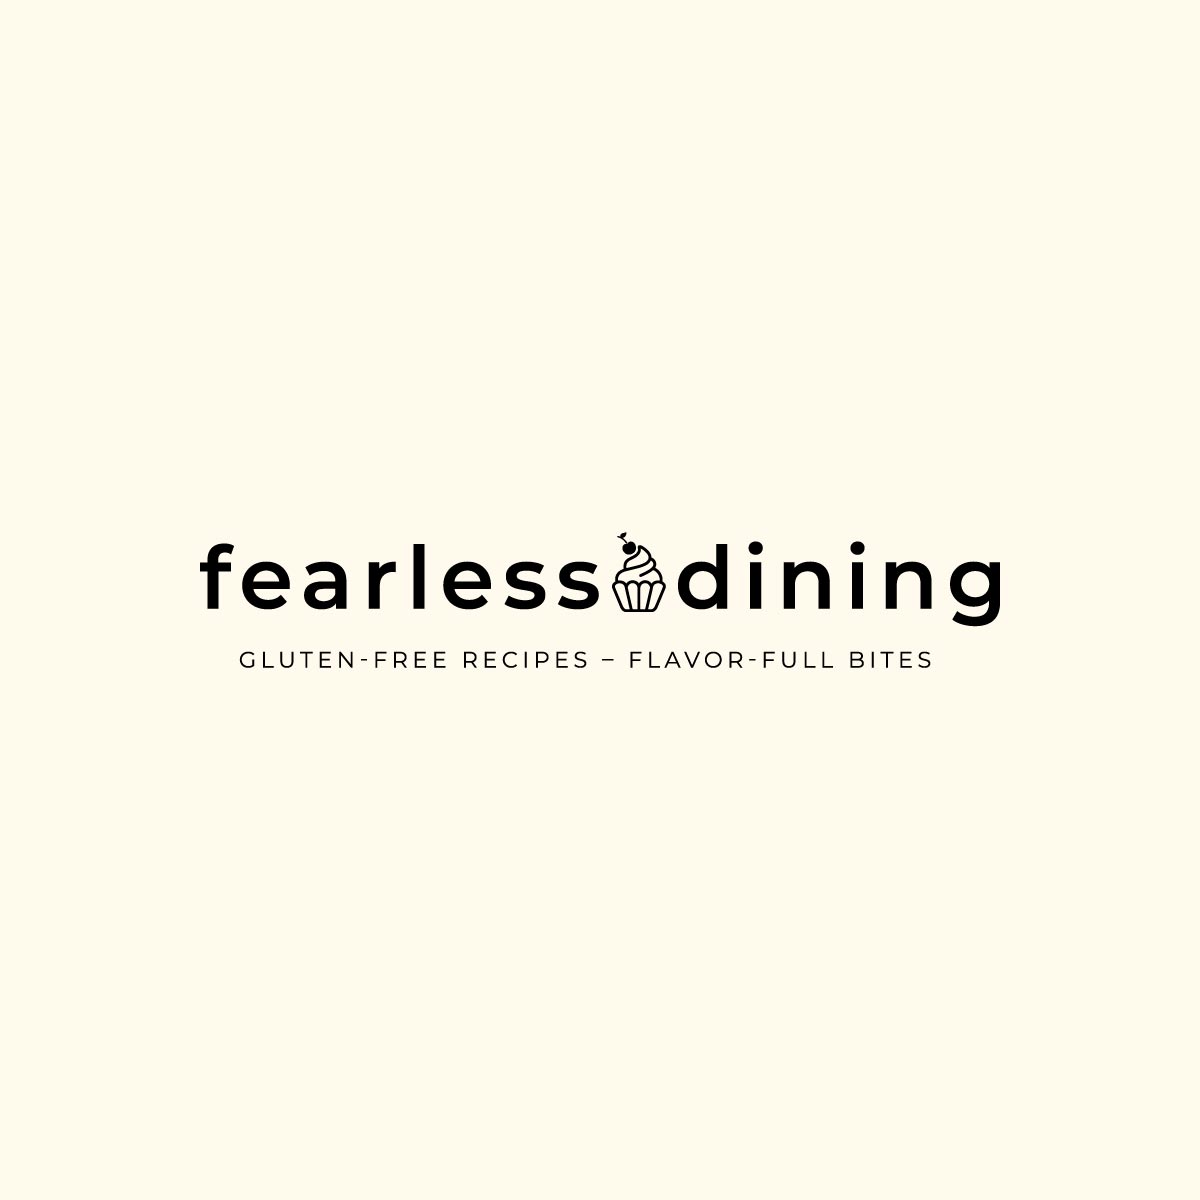 Fearless Dining Main Logo Monochromatic black on light background